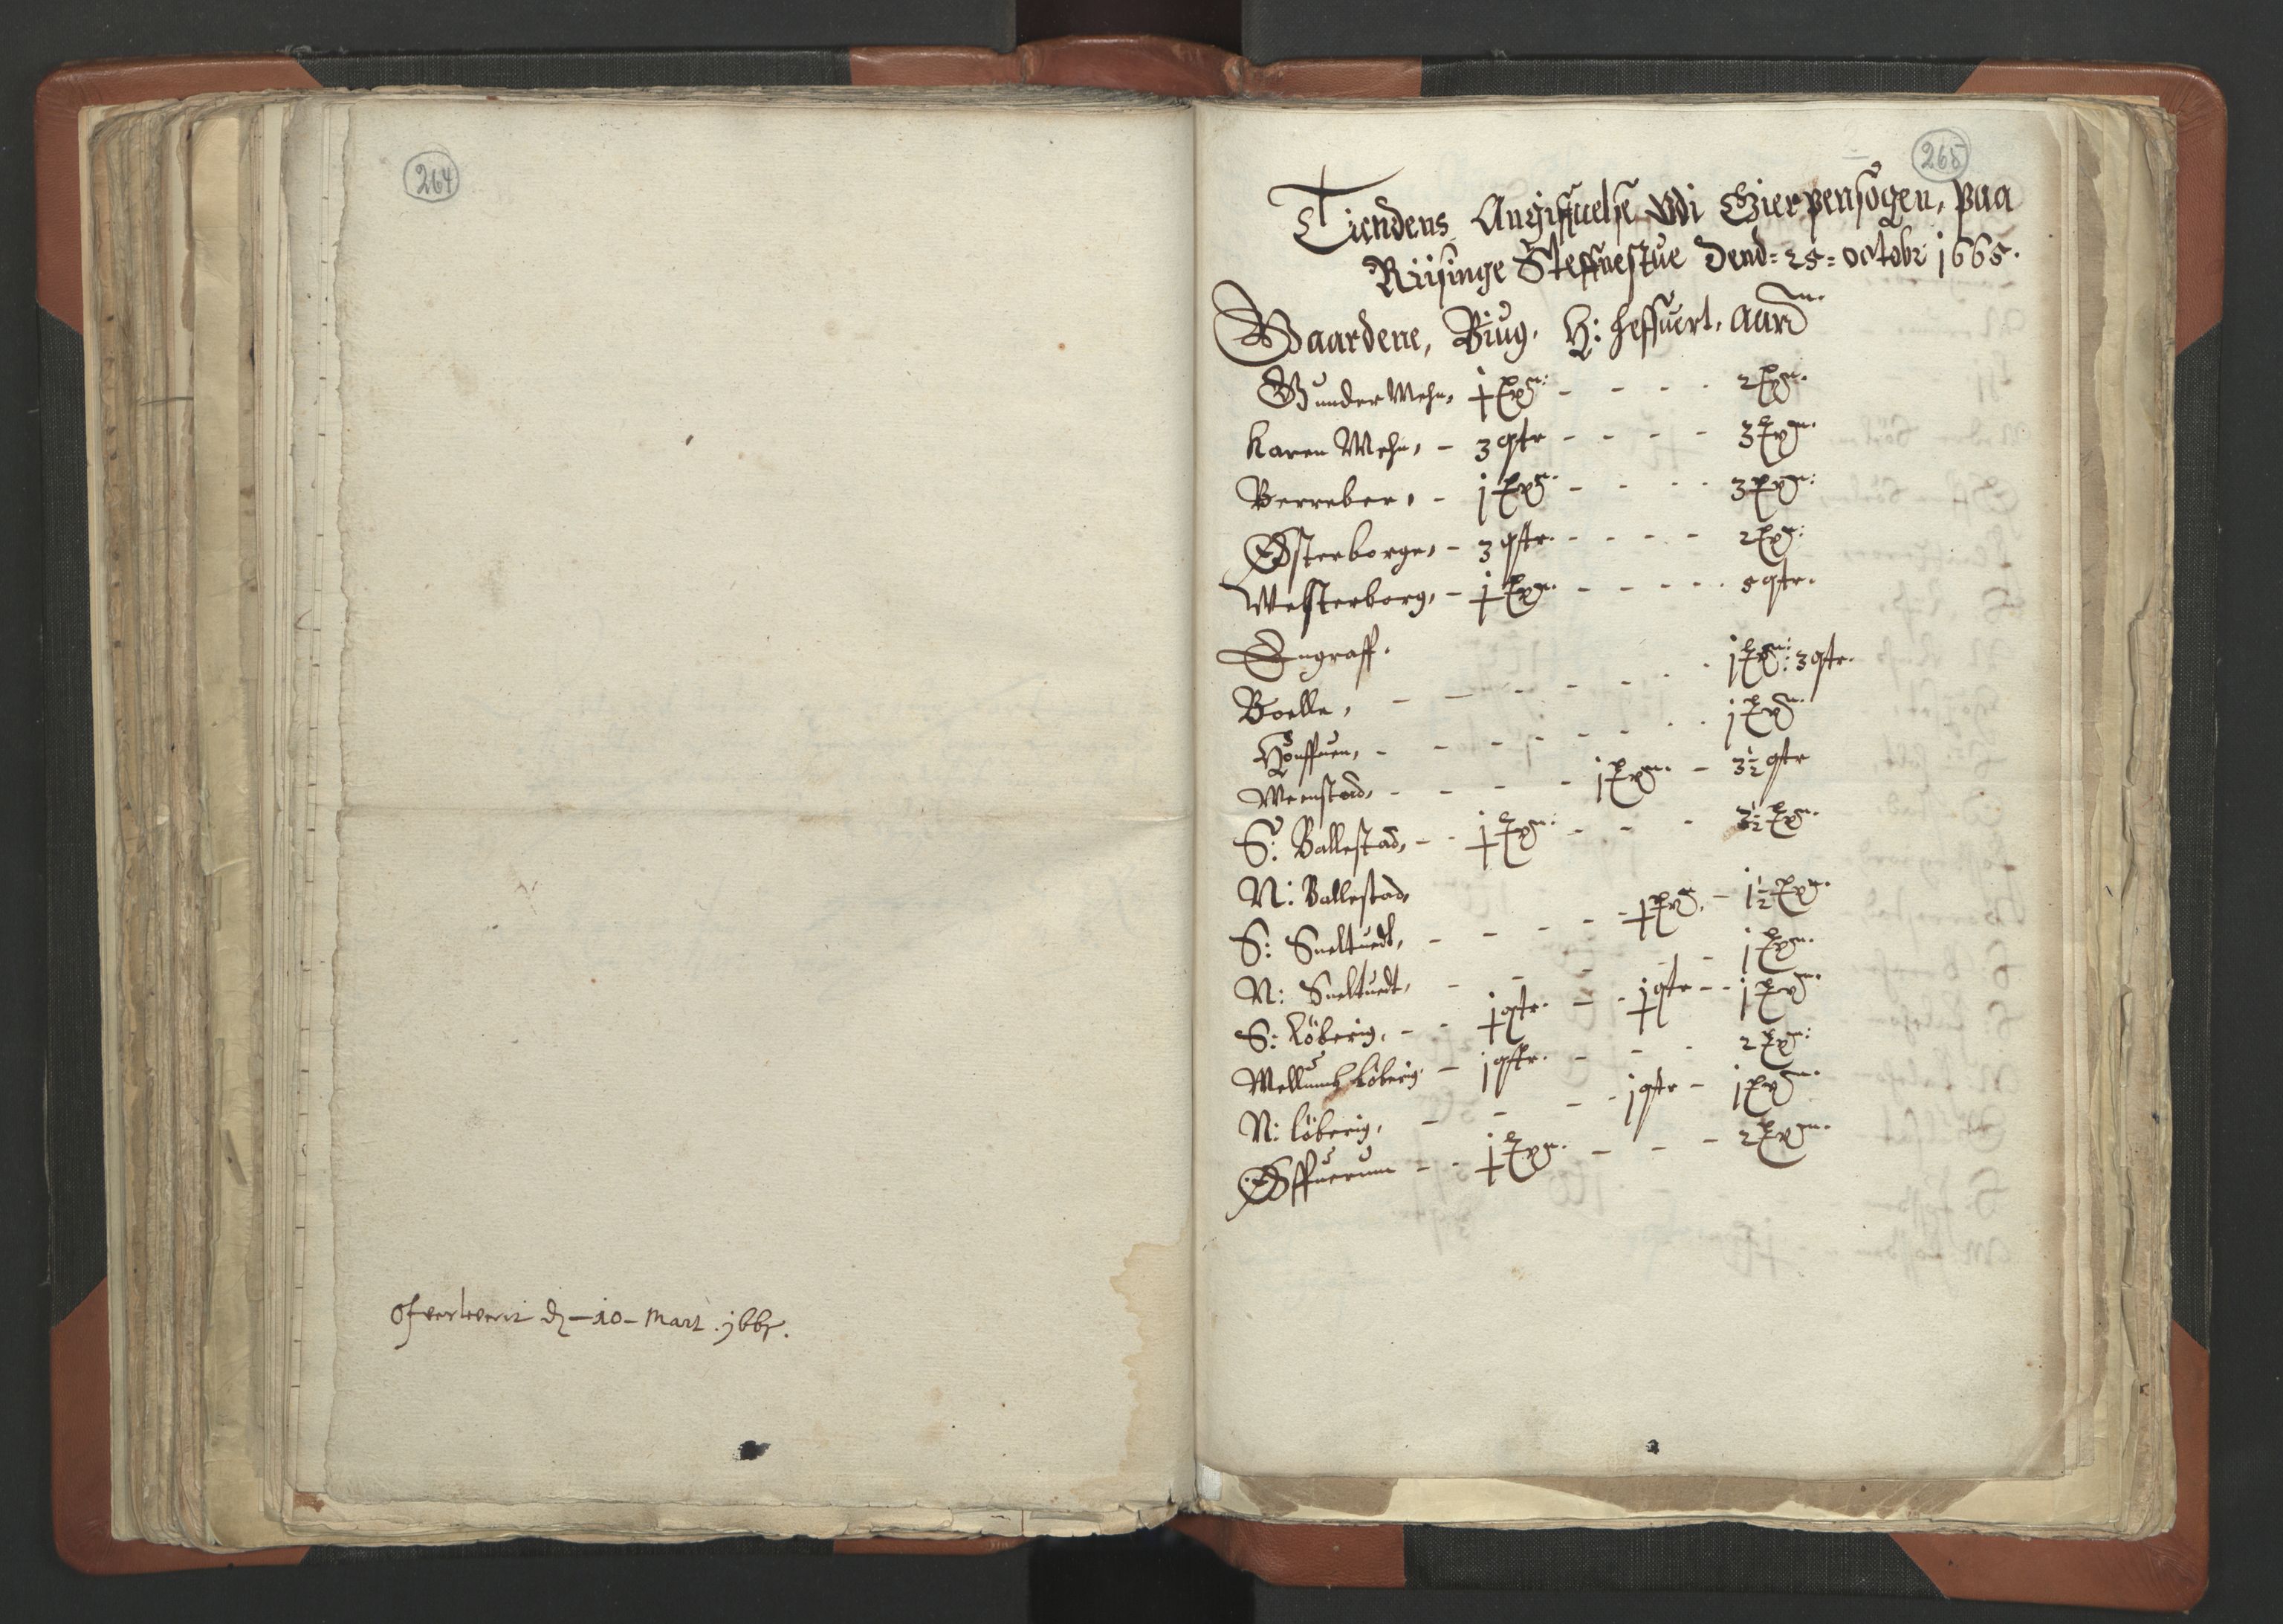 RA, Vicar's Census 1664-1666, no. 12: Øvre Telemark deanery, Nedre Telemark deanery and Bamble deanery, 1664-1666, p. 264-265